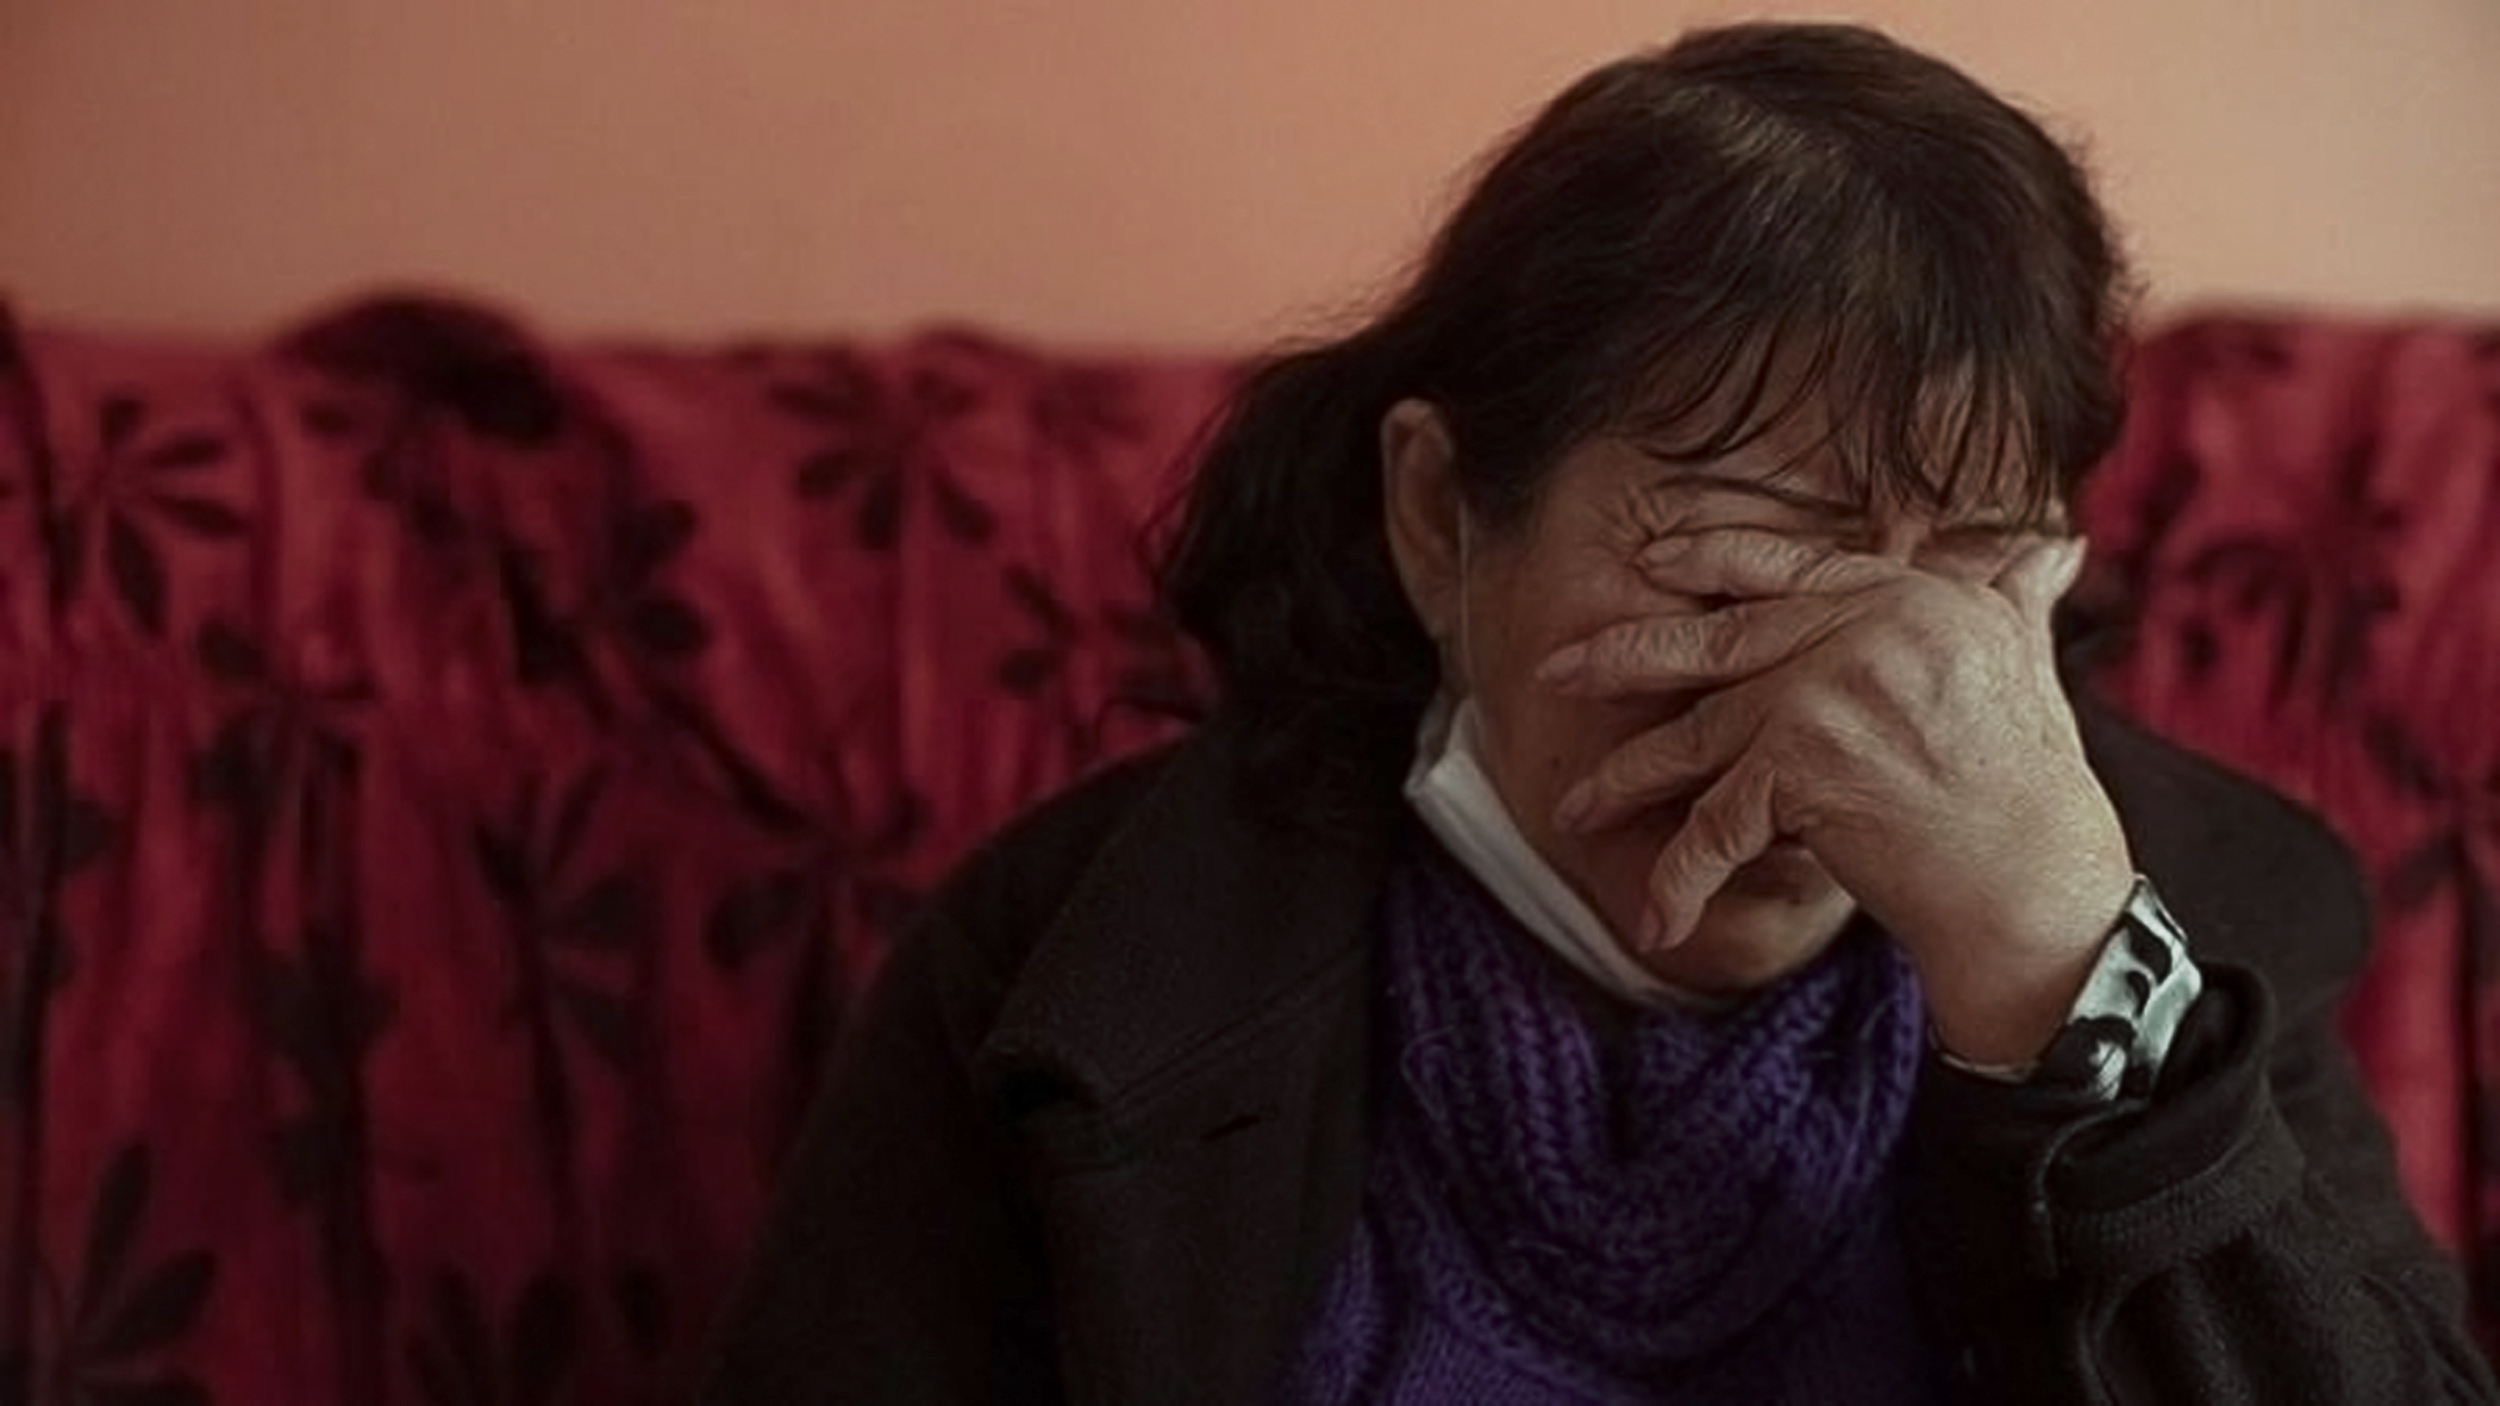 Ribuan Perempuan Hilang Akibat Kekerasan Rumah Tangga Dan Pelecehan Seksual Di Peru, “Mereka Manusia, Bukan Hanya Angka”